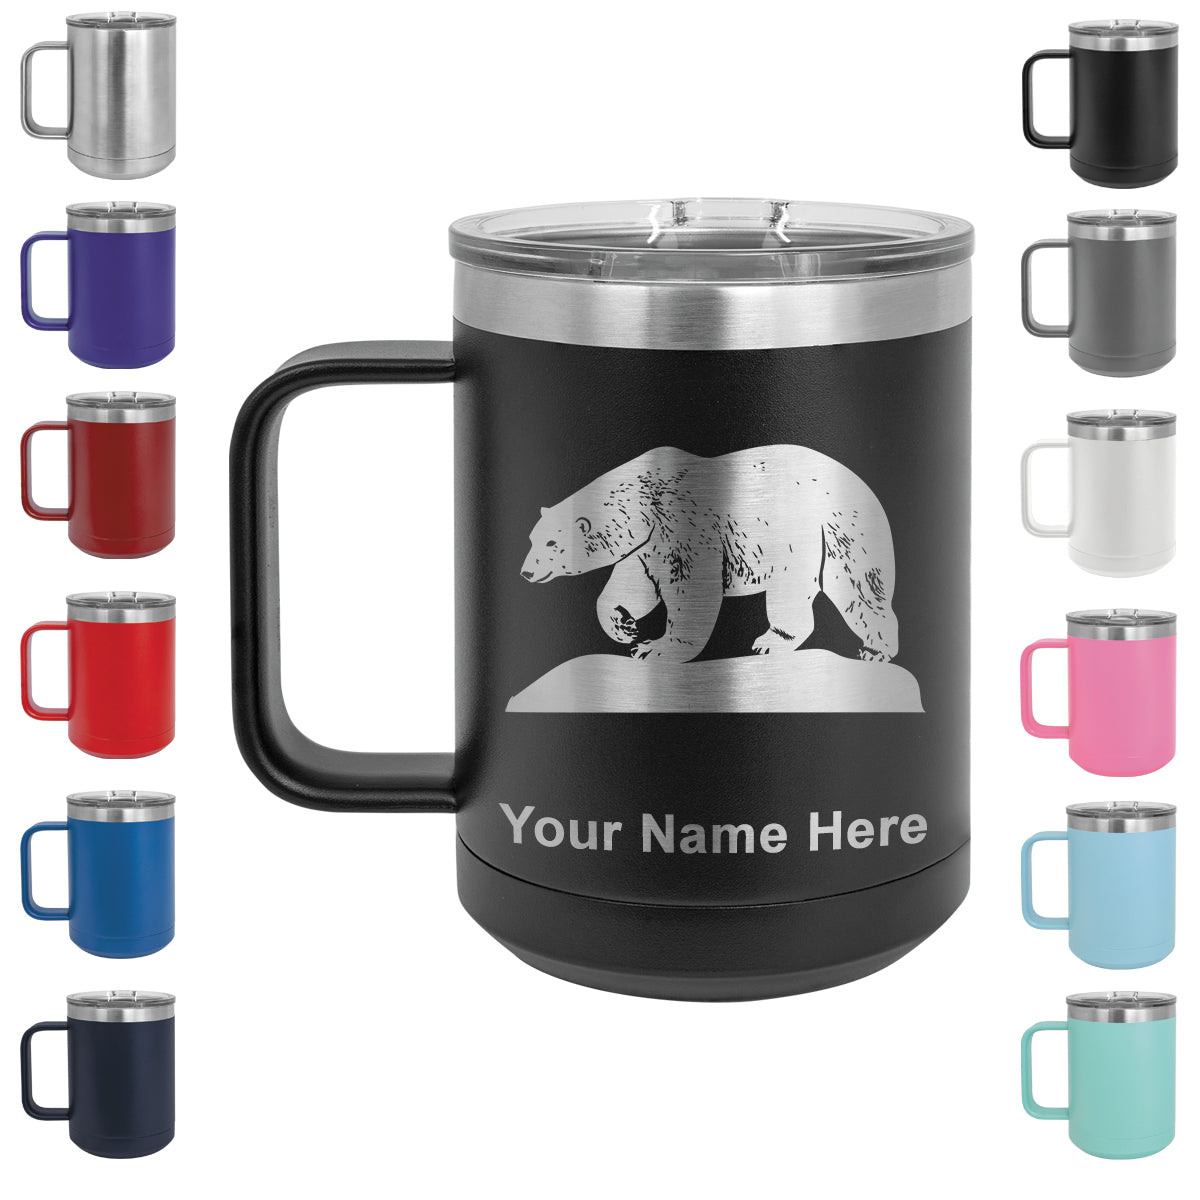 15oz Vacuum Insulated Coffee Mug, Polar Bear, Personalized Engraving Included